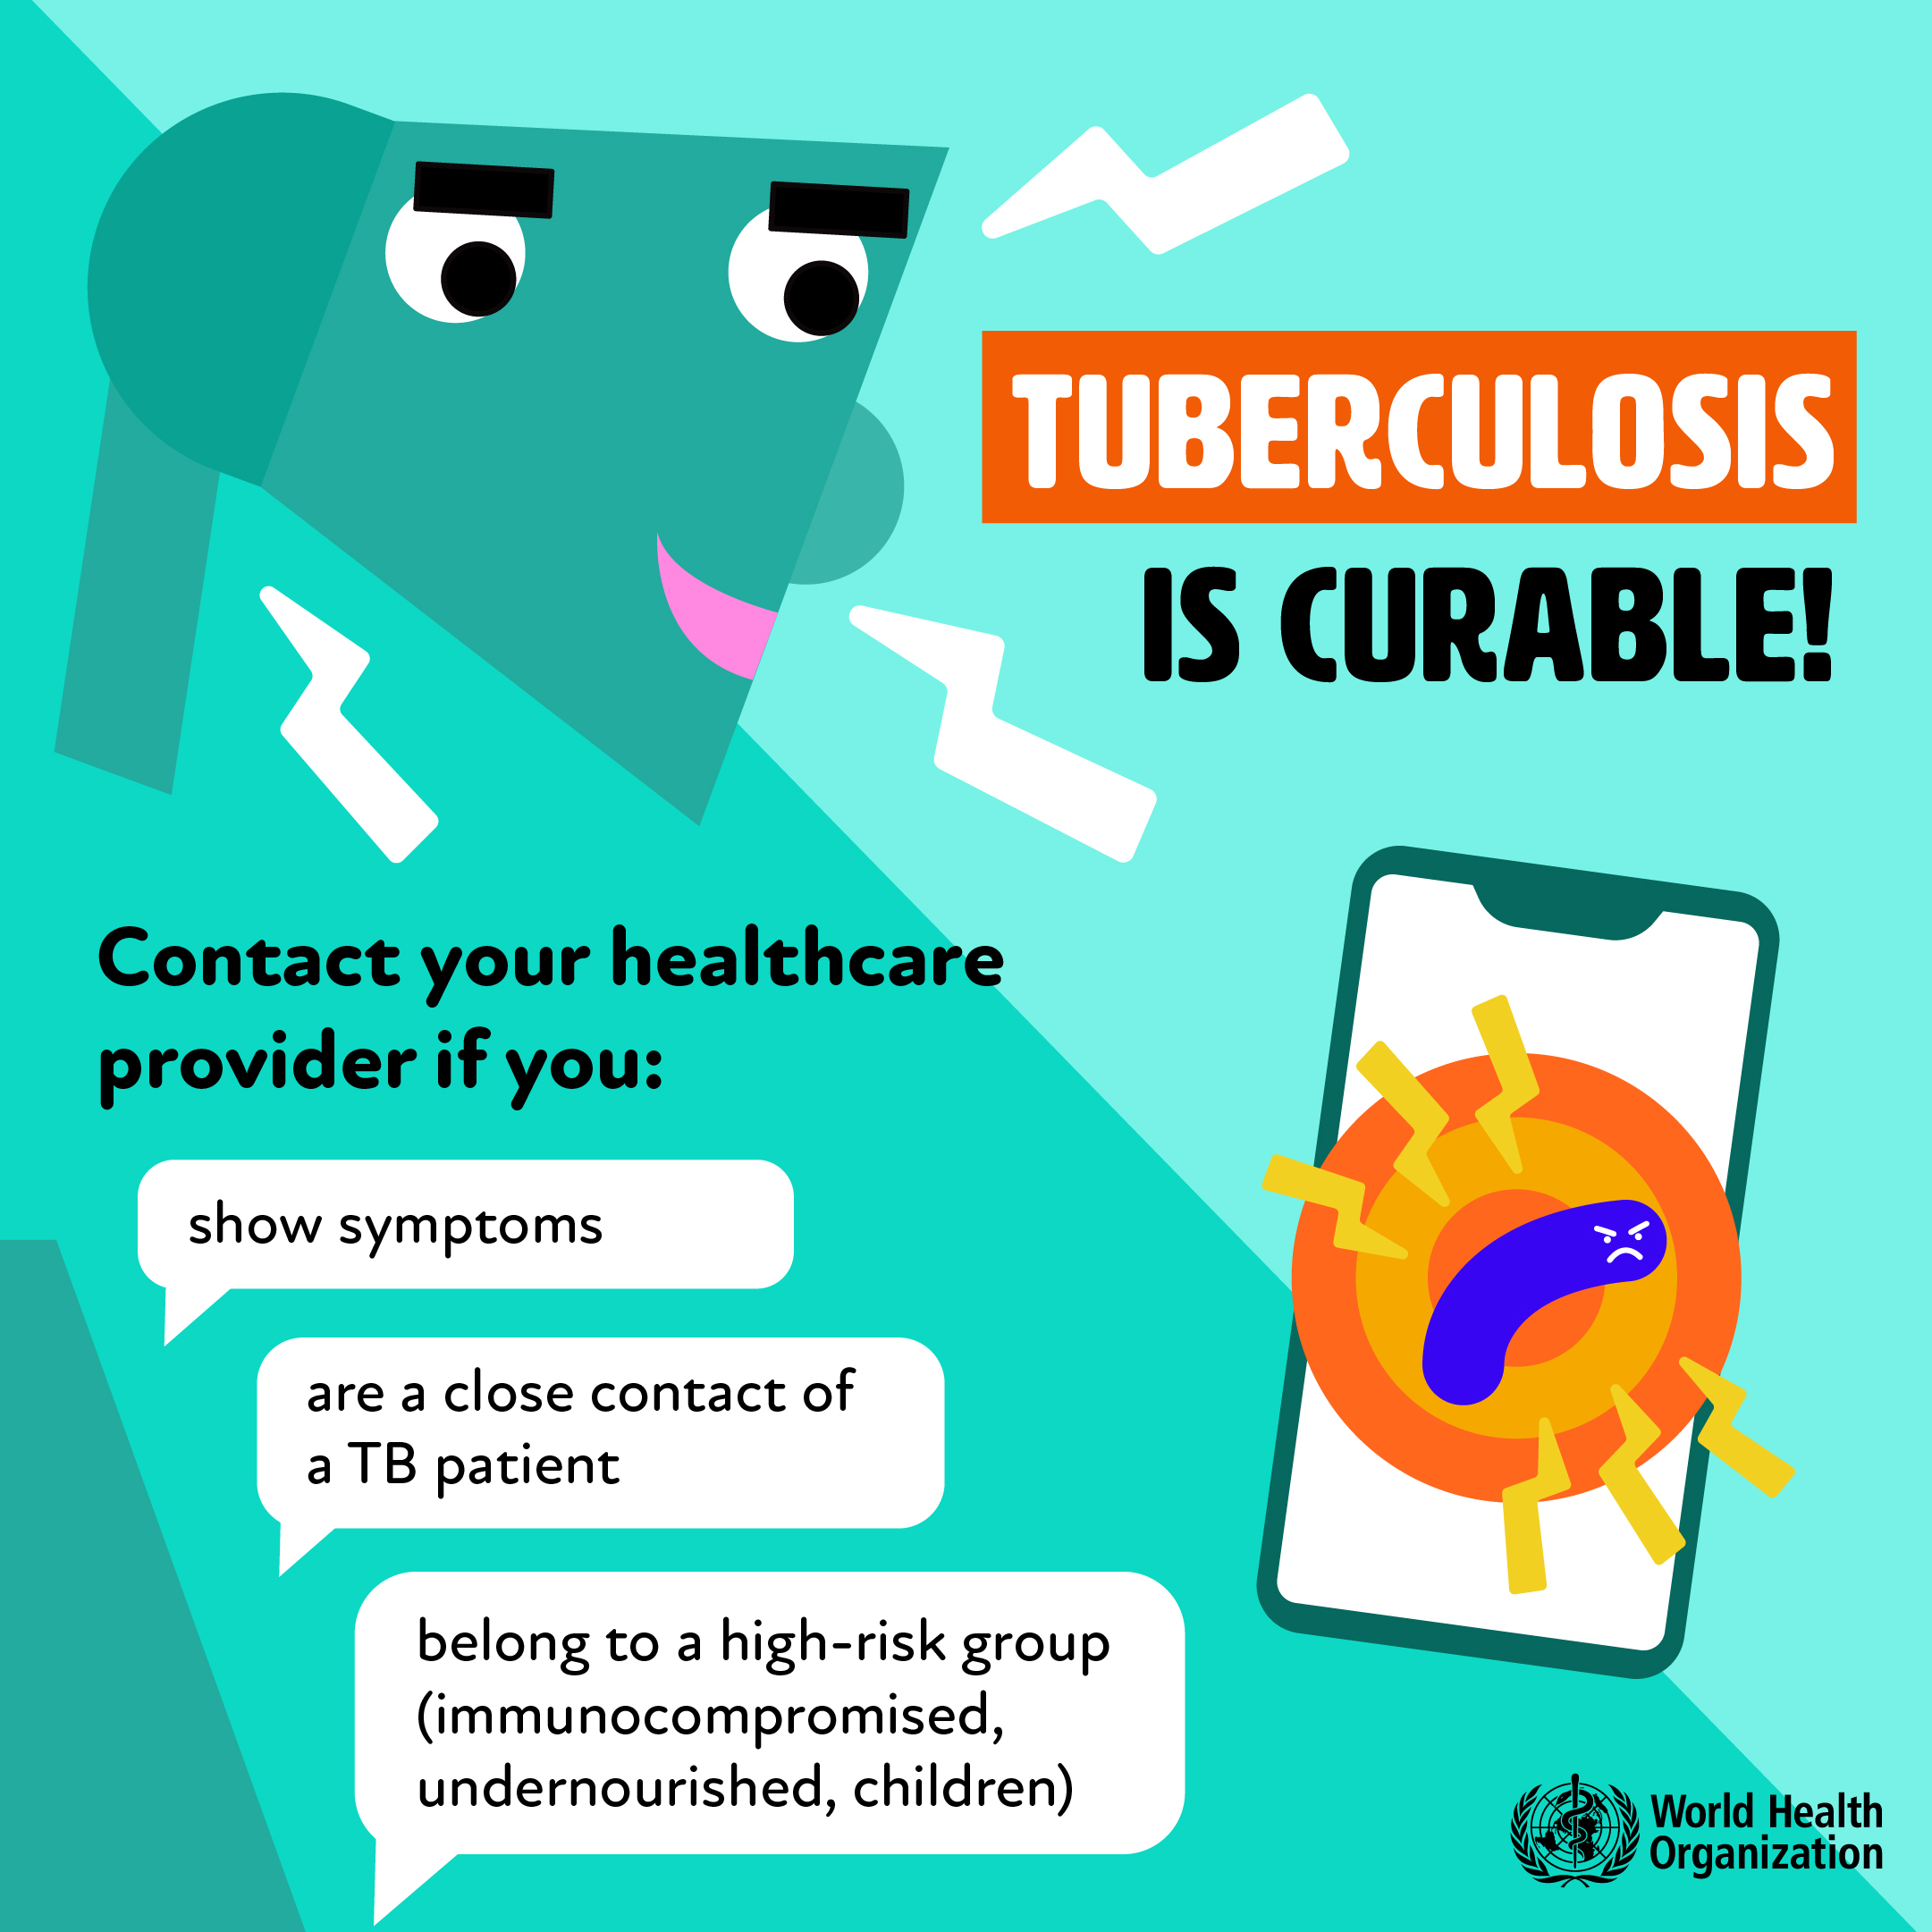 World Tuberculosis Day 2024